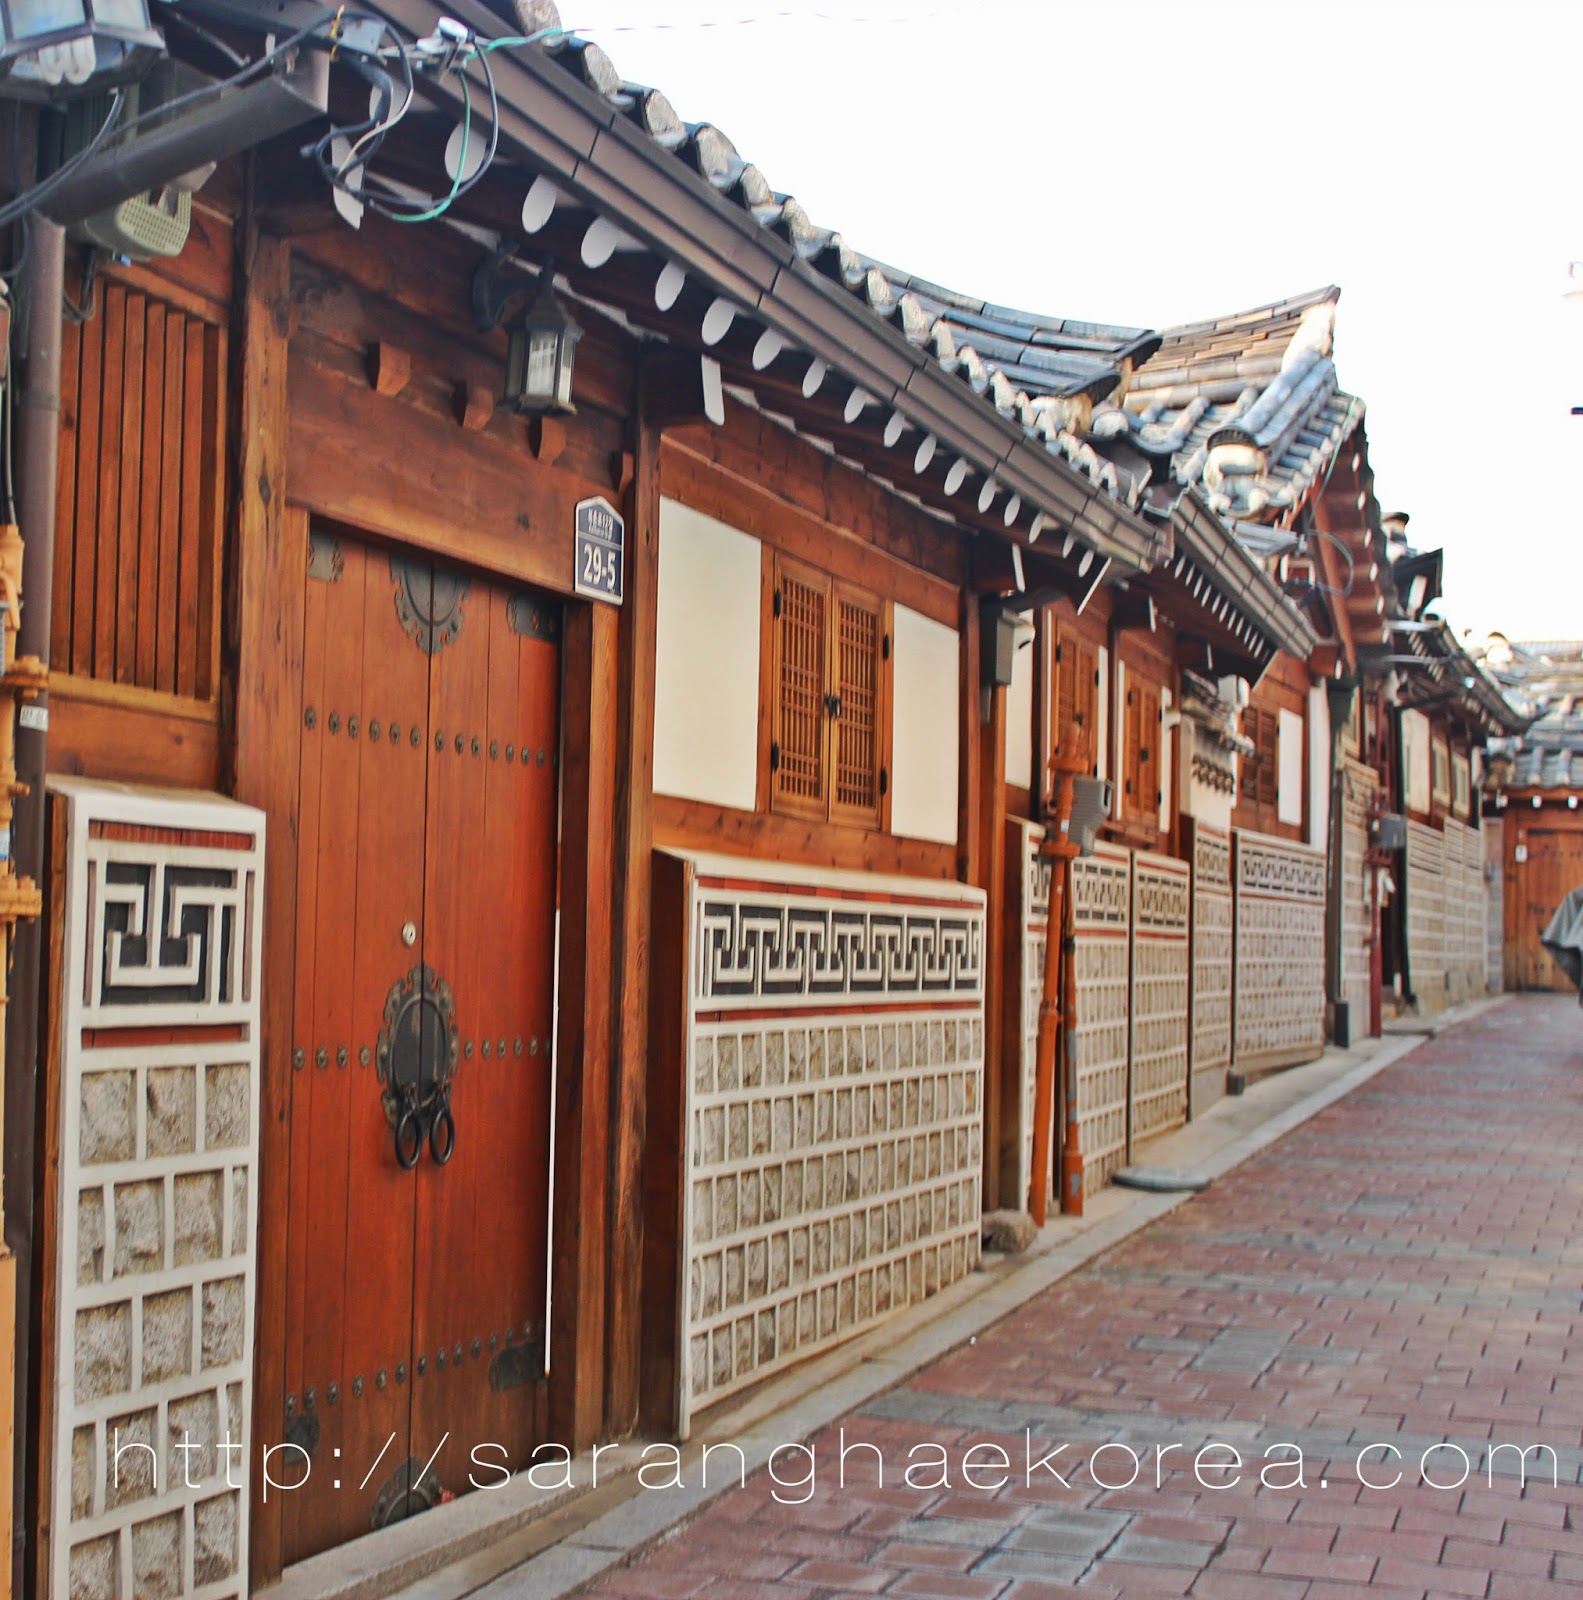 Of Sanggojae and Bukchon Hanok Village